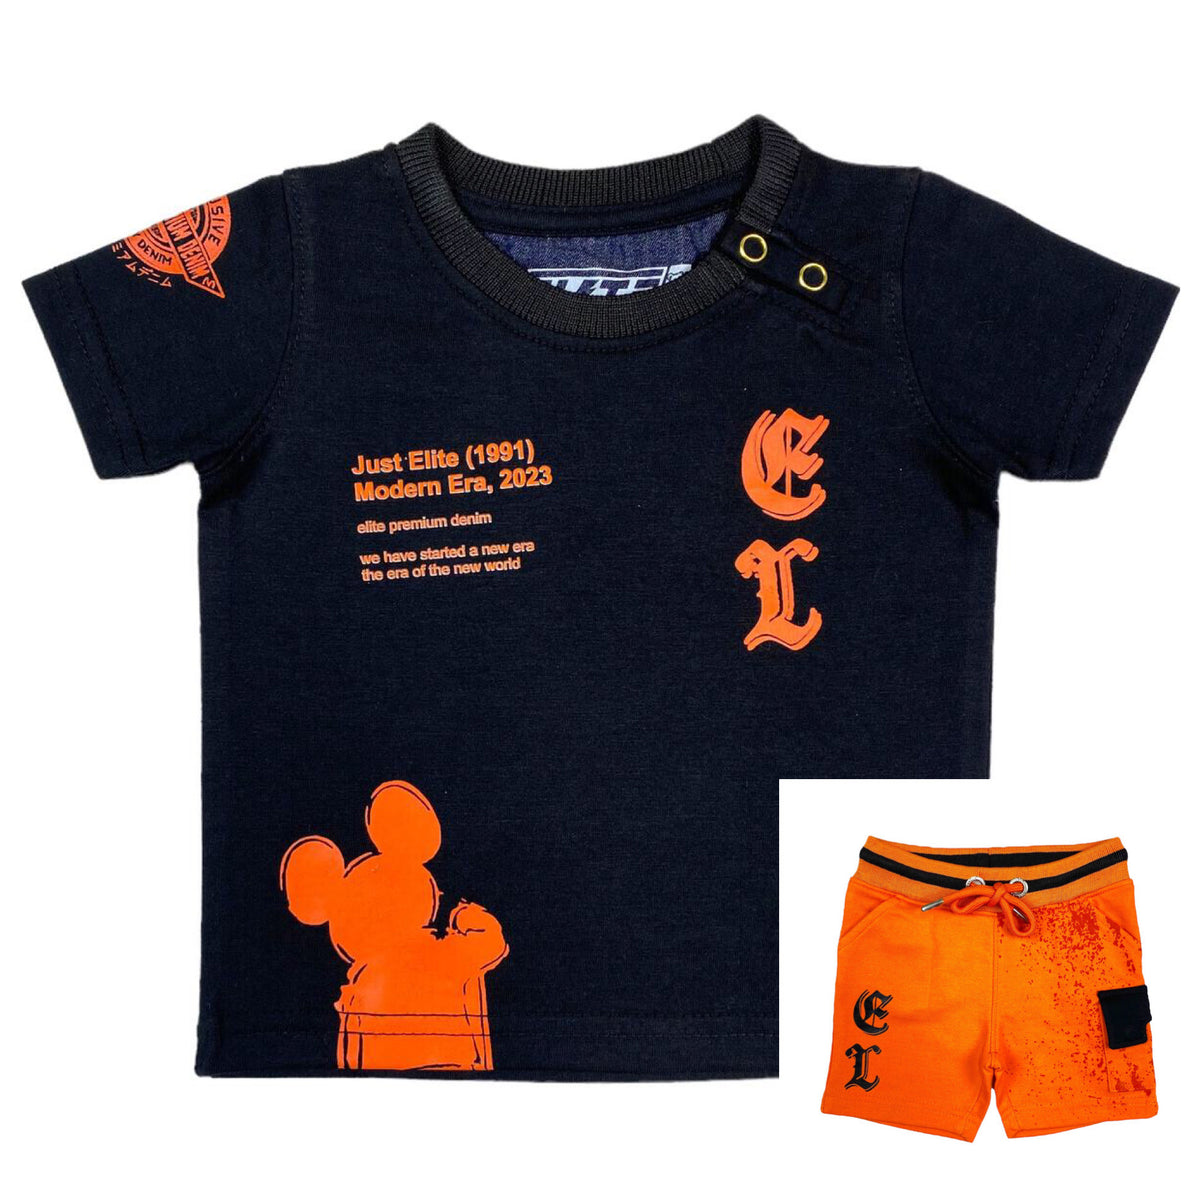 Elite Premium Denim - Dystopia Infant Boys Set - Black/Orange